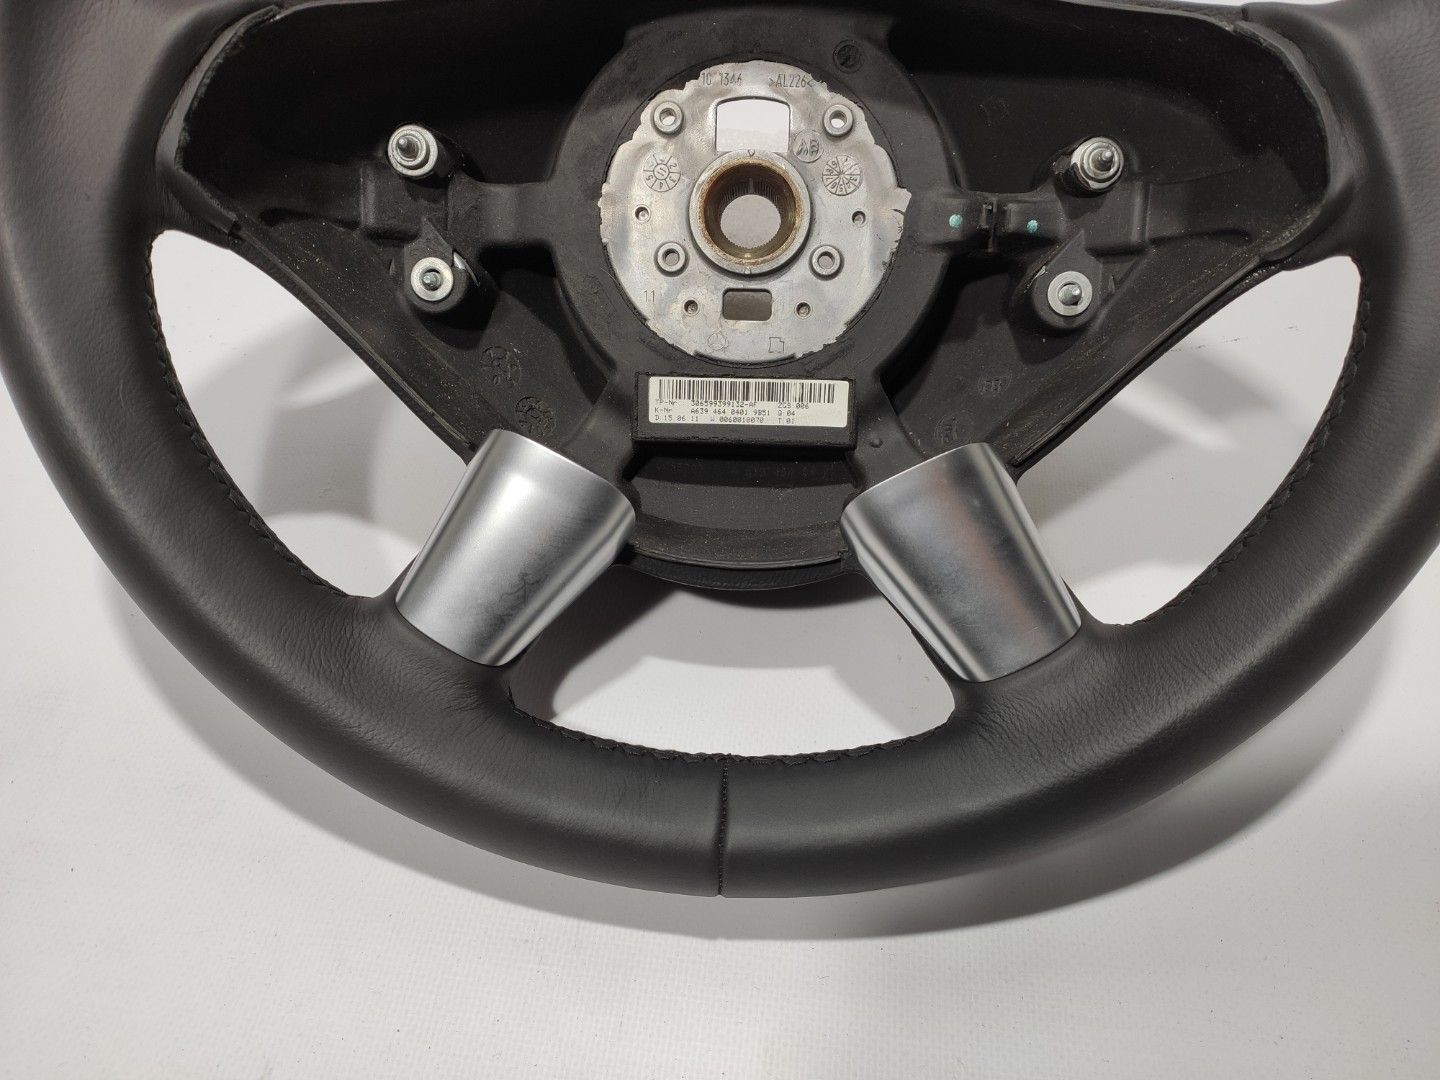 Mercedes-Benz Vito Viano W639 2010-2014 Steering Wheel Carbon Fiber Black Leather